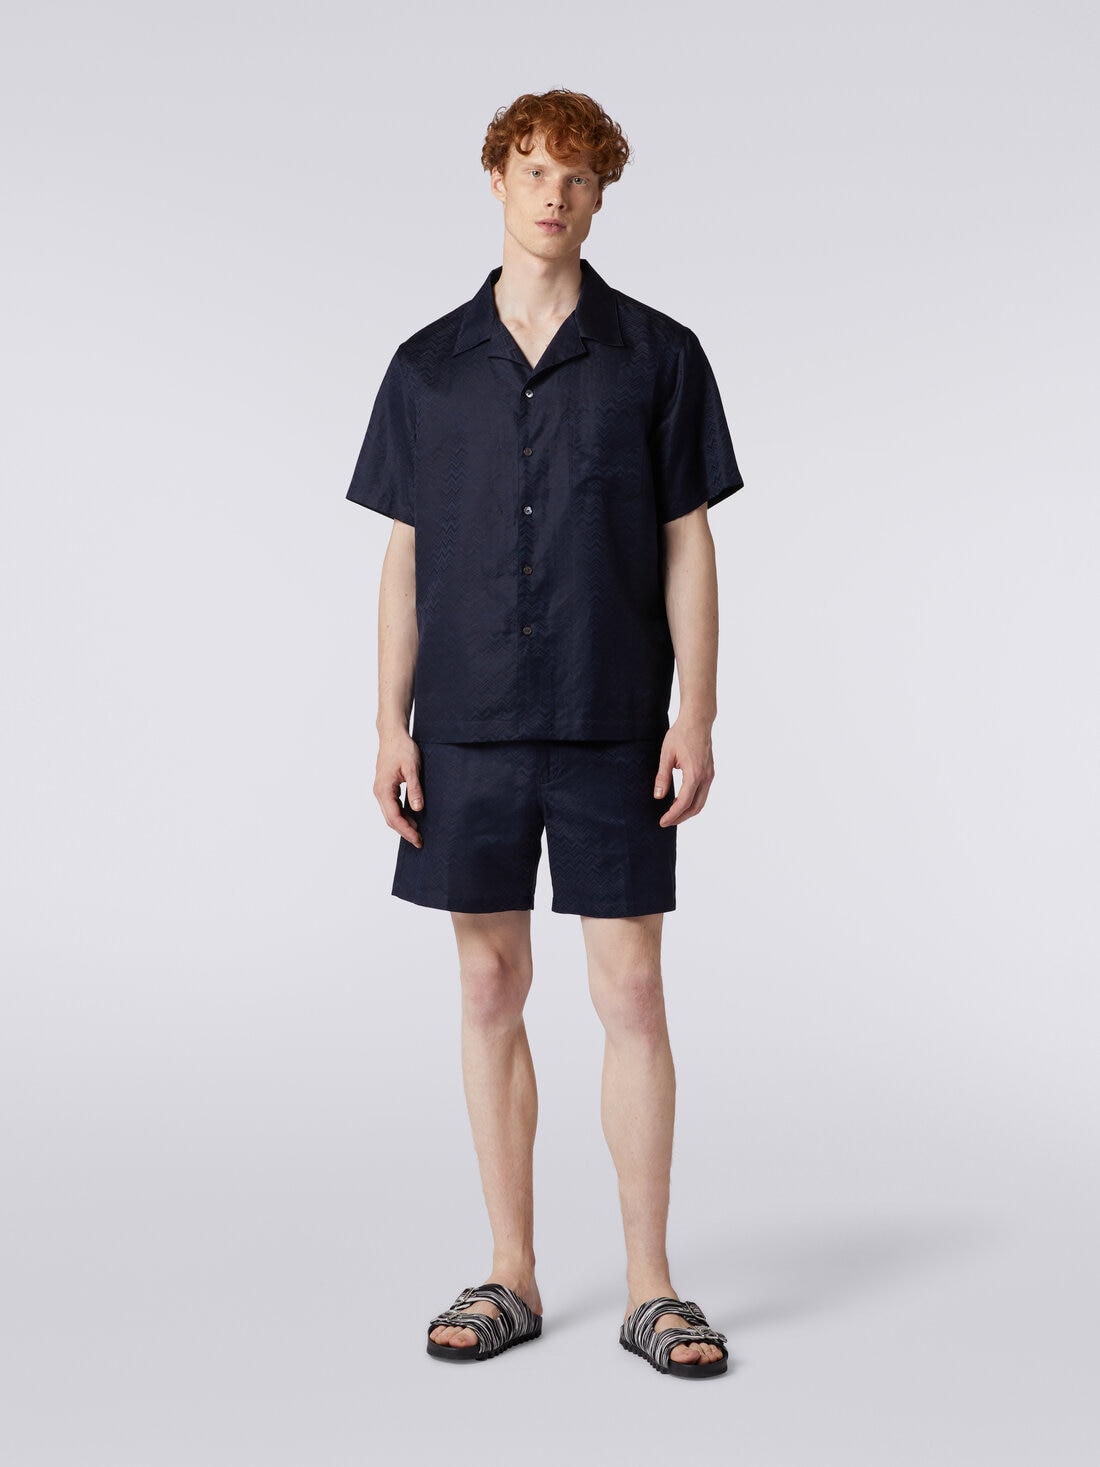 Short-sleeved chevron cotton blend bowling shirt, Dark Blue - US24SJ09BW00RT93924 - 1